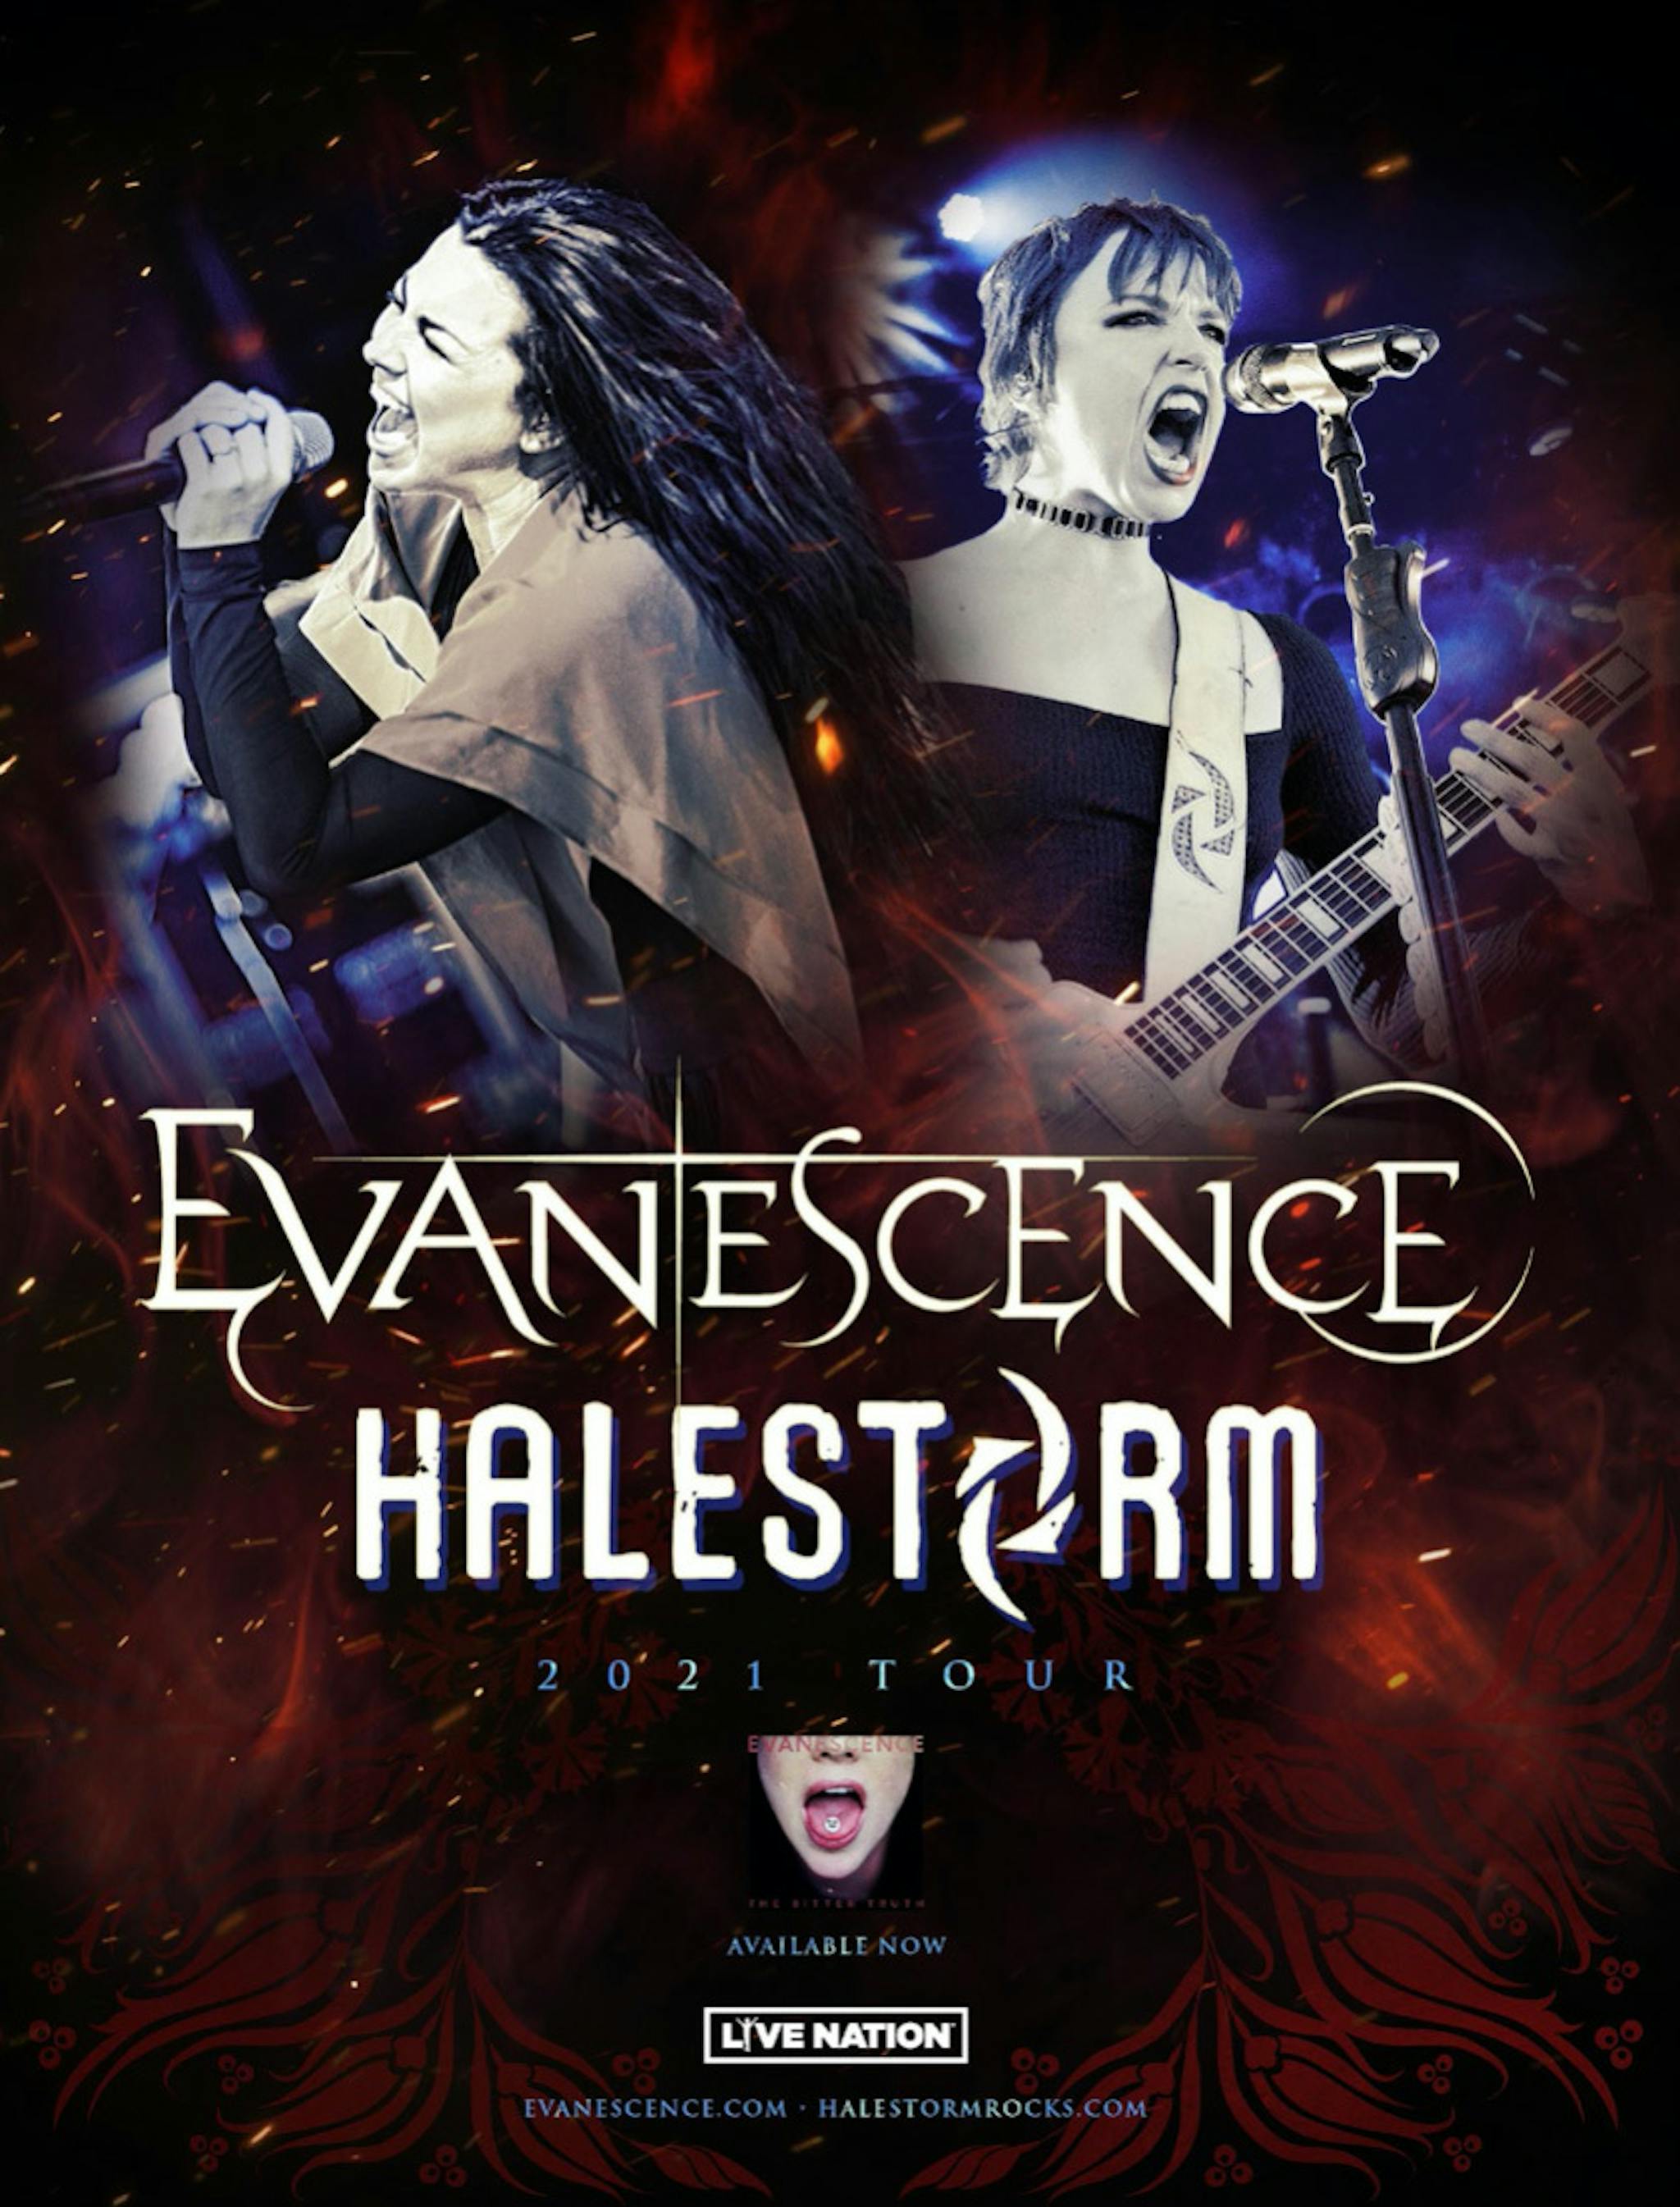 Evanescence Halestorm 2021 coheadline US tour